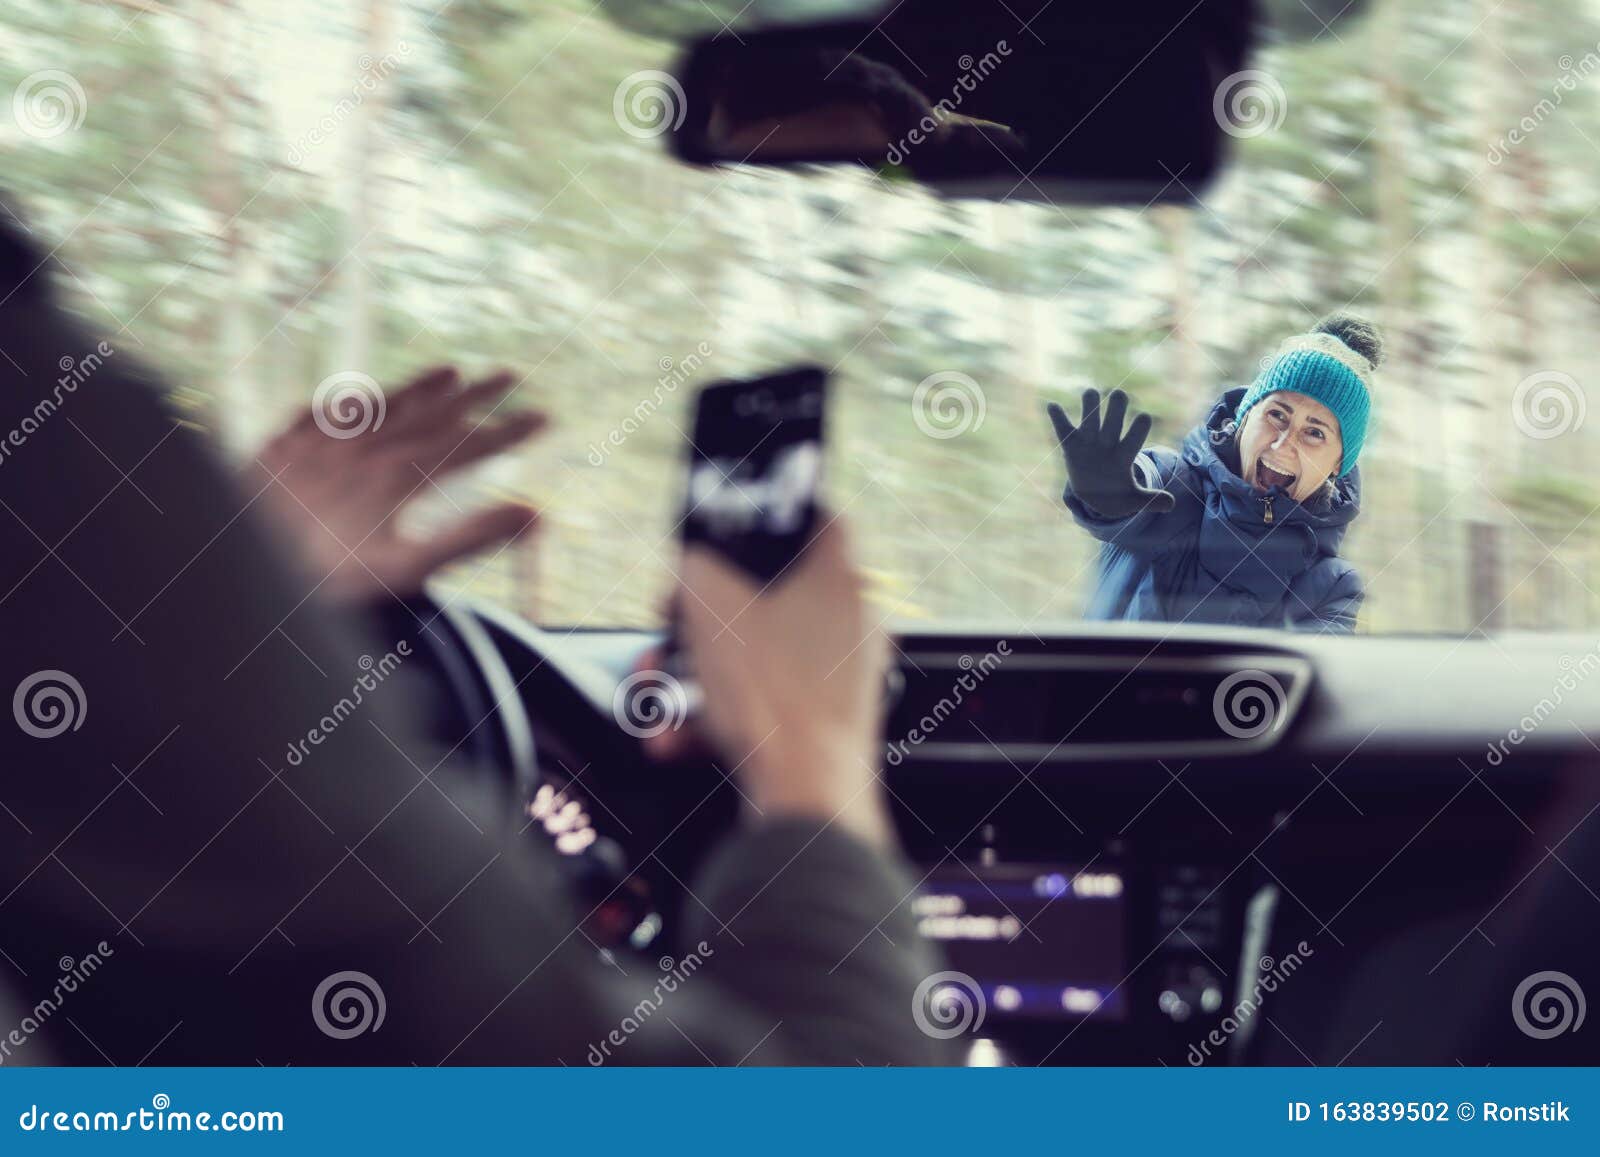 pedestrian accident - man using a phone while driving a car